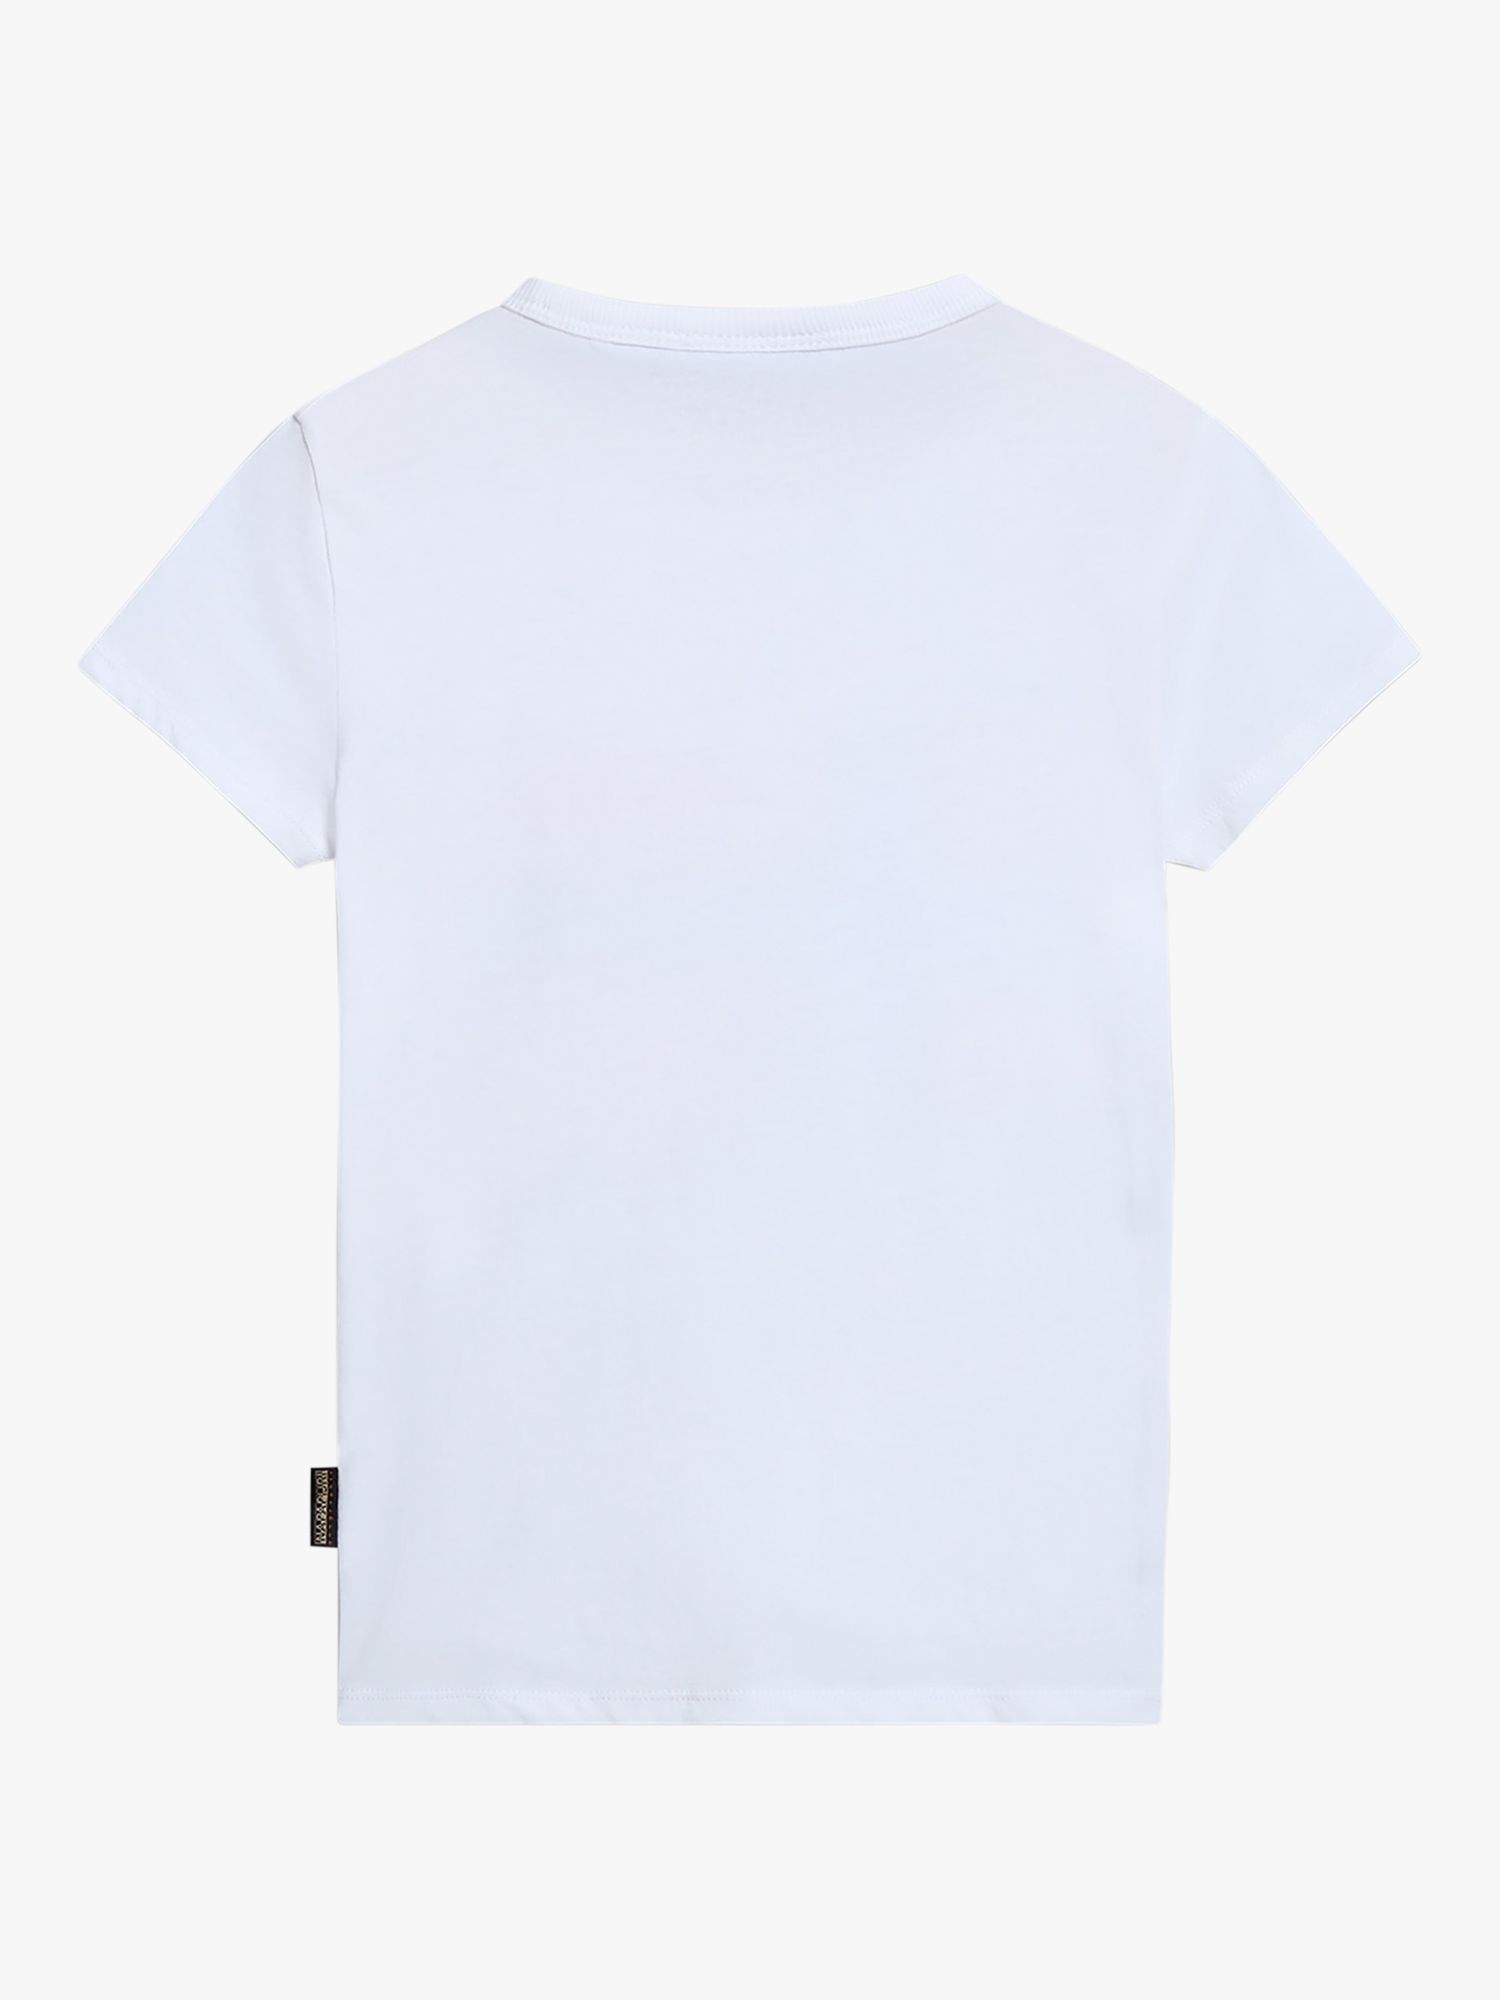 Napapijri Kids' Liard Flag Short Sleeve T-Shirt, White, 16 years